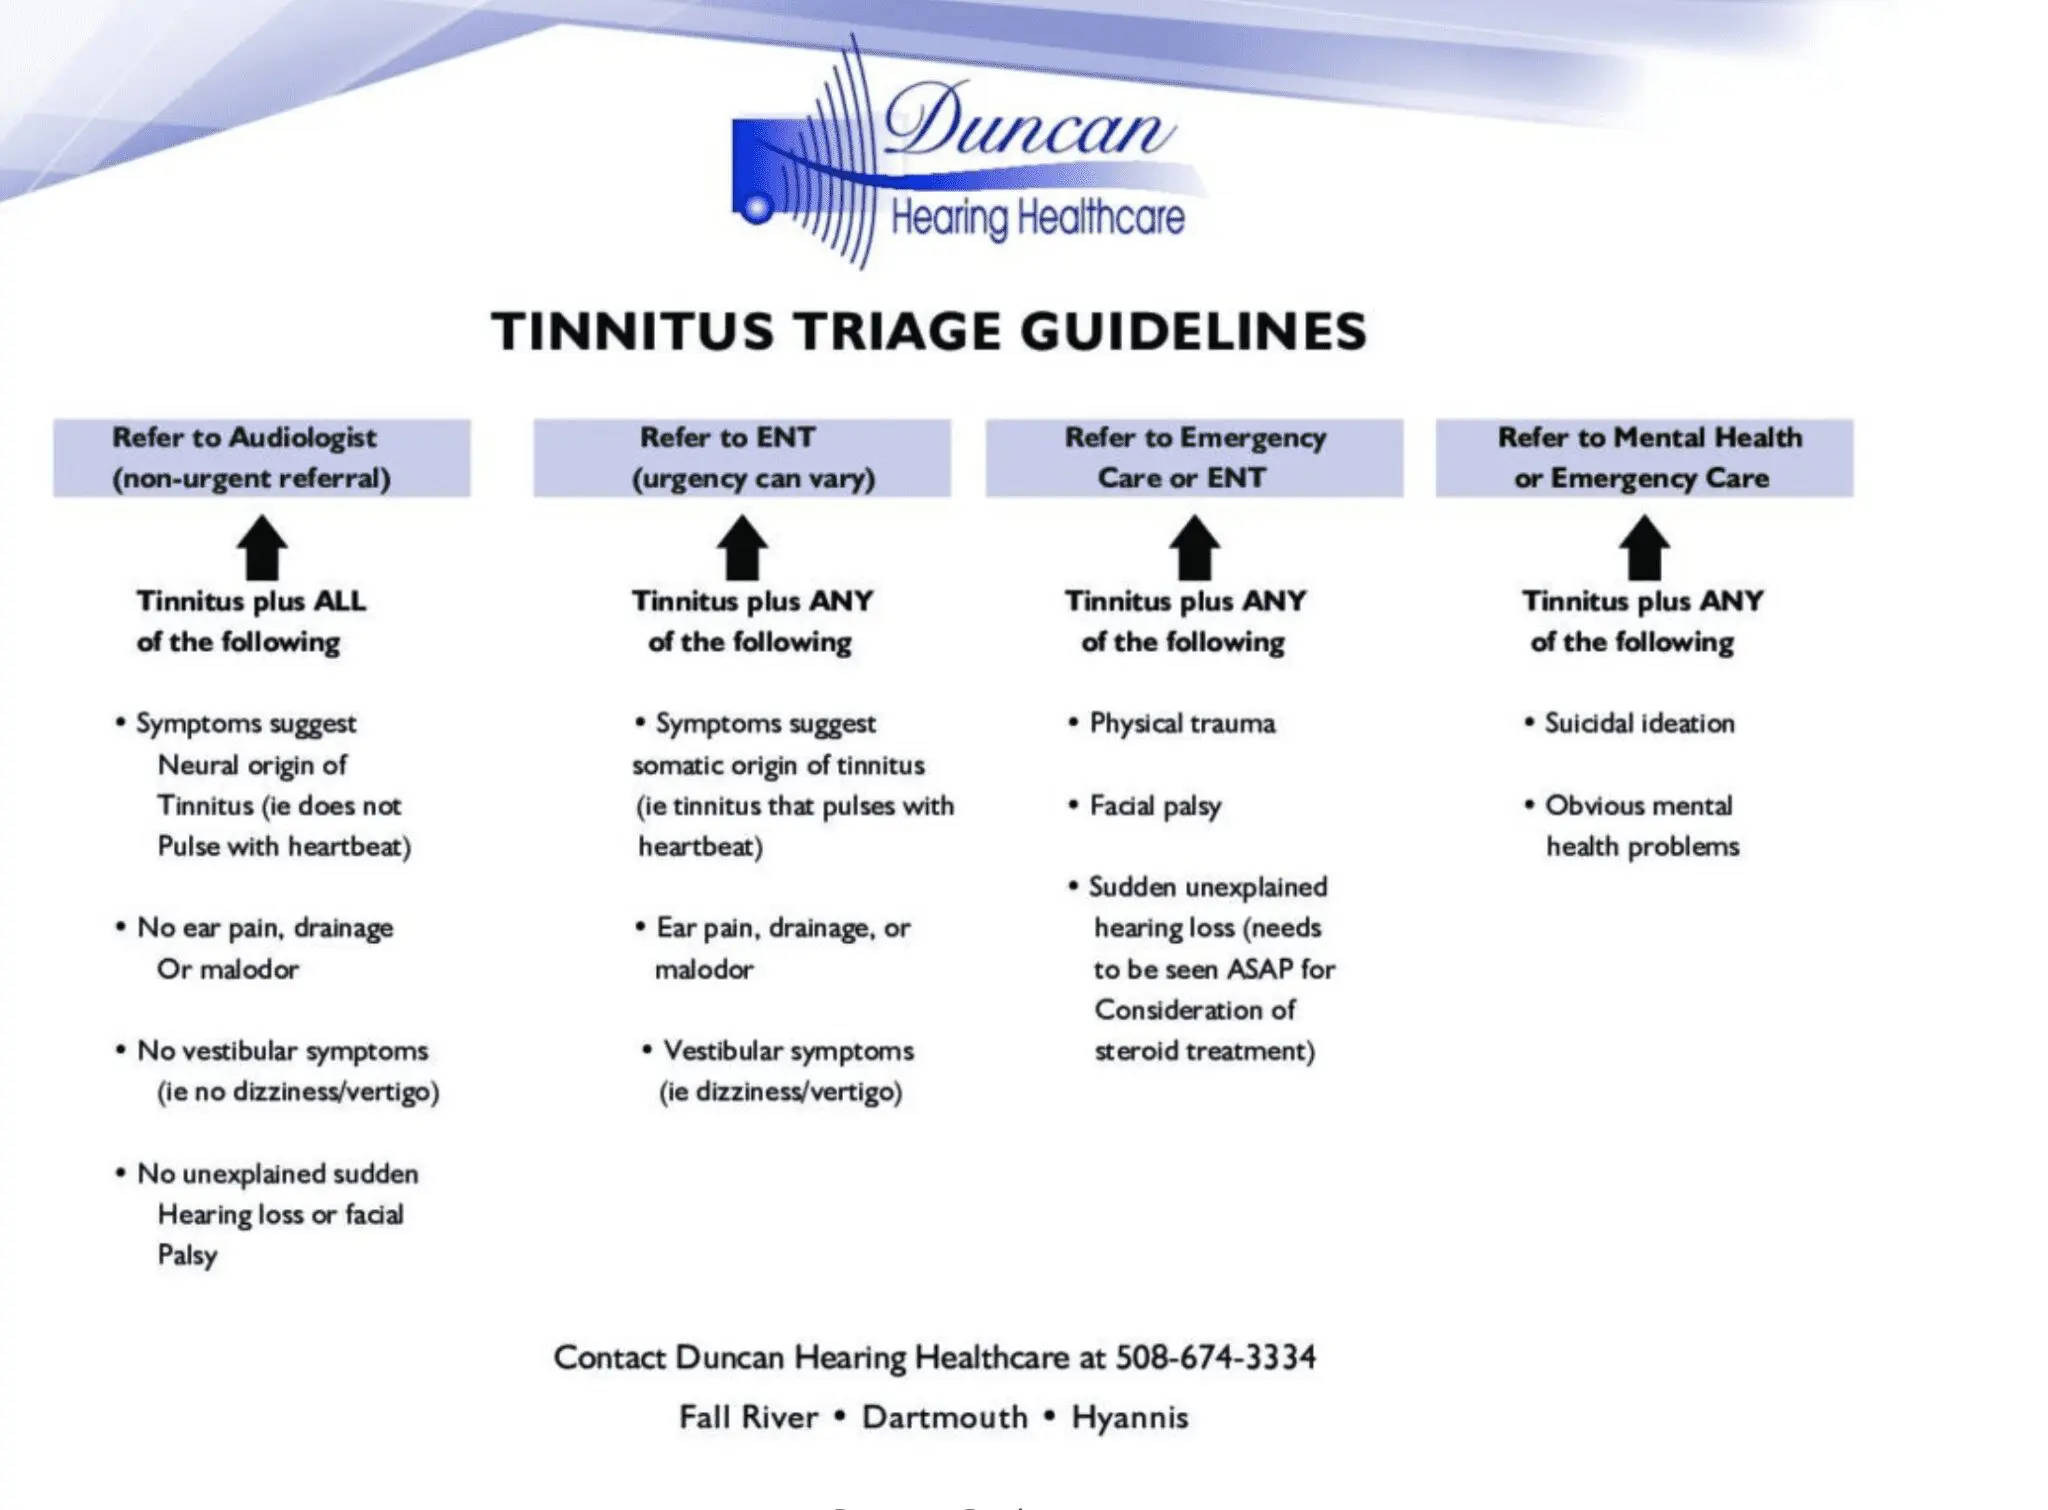 Tinnitus Triage Guidelines Image